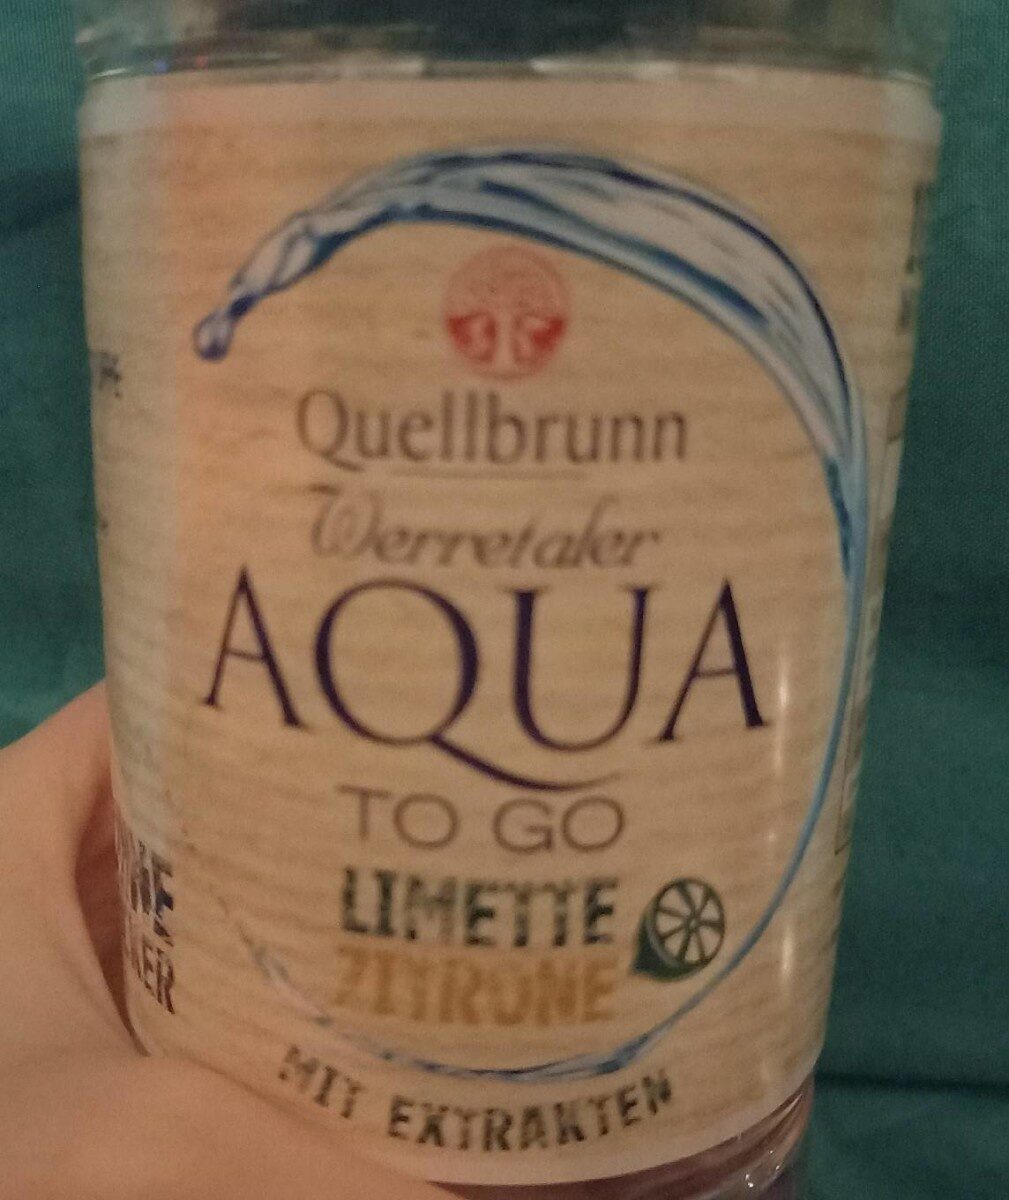 Aqua to Go Limette Zitrone - Product